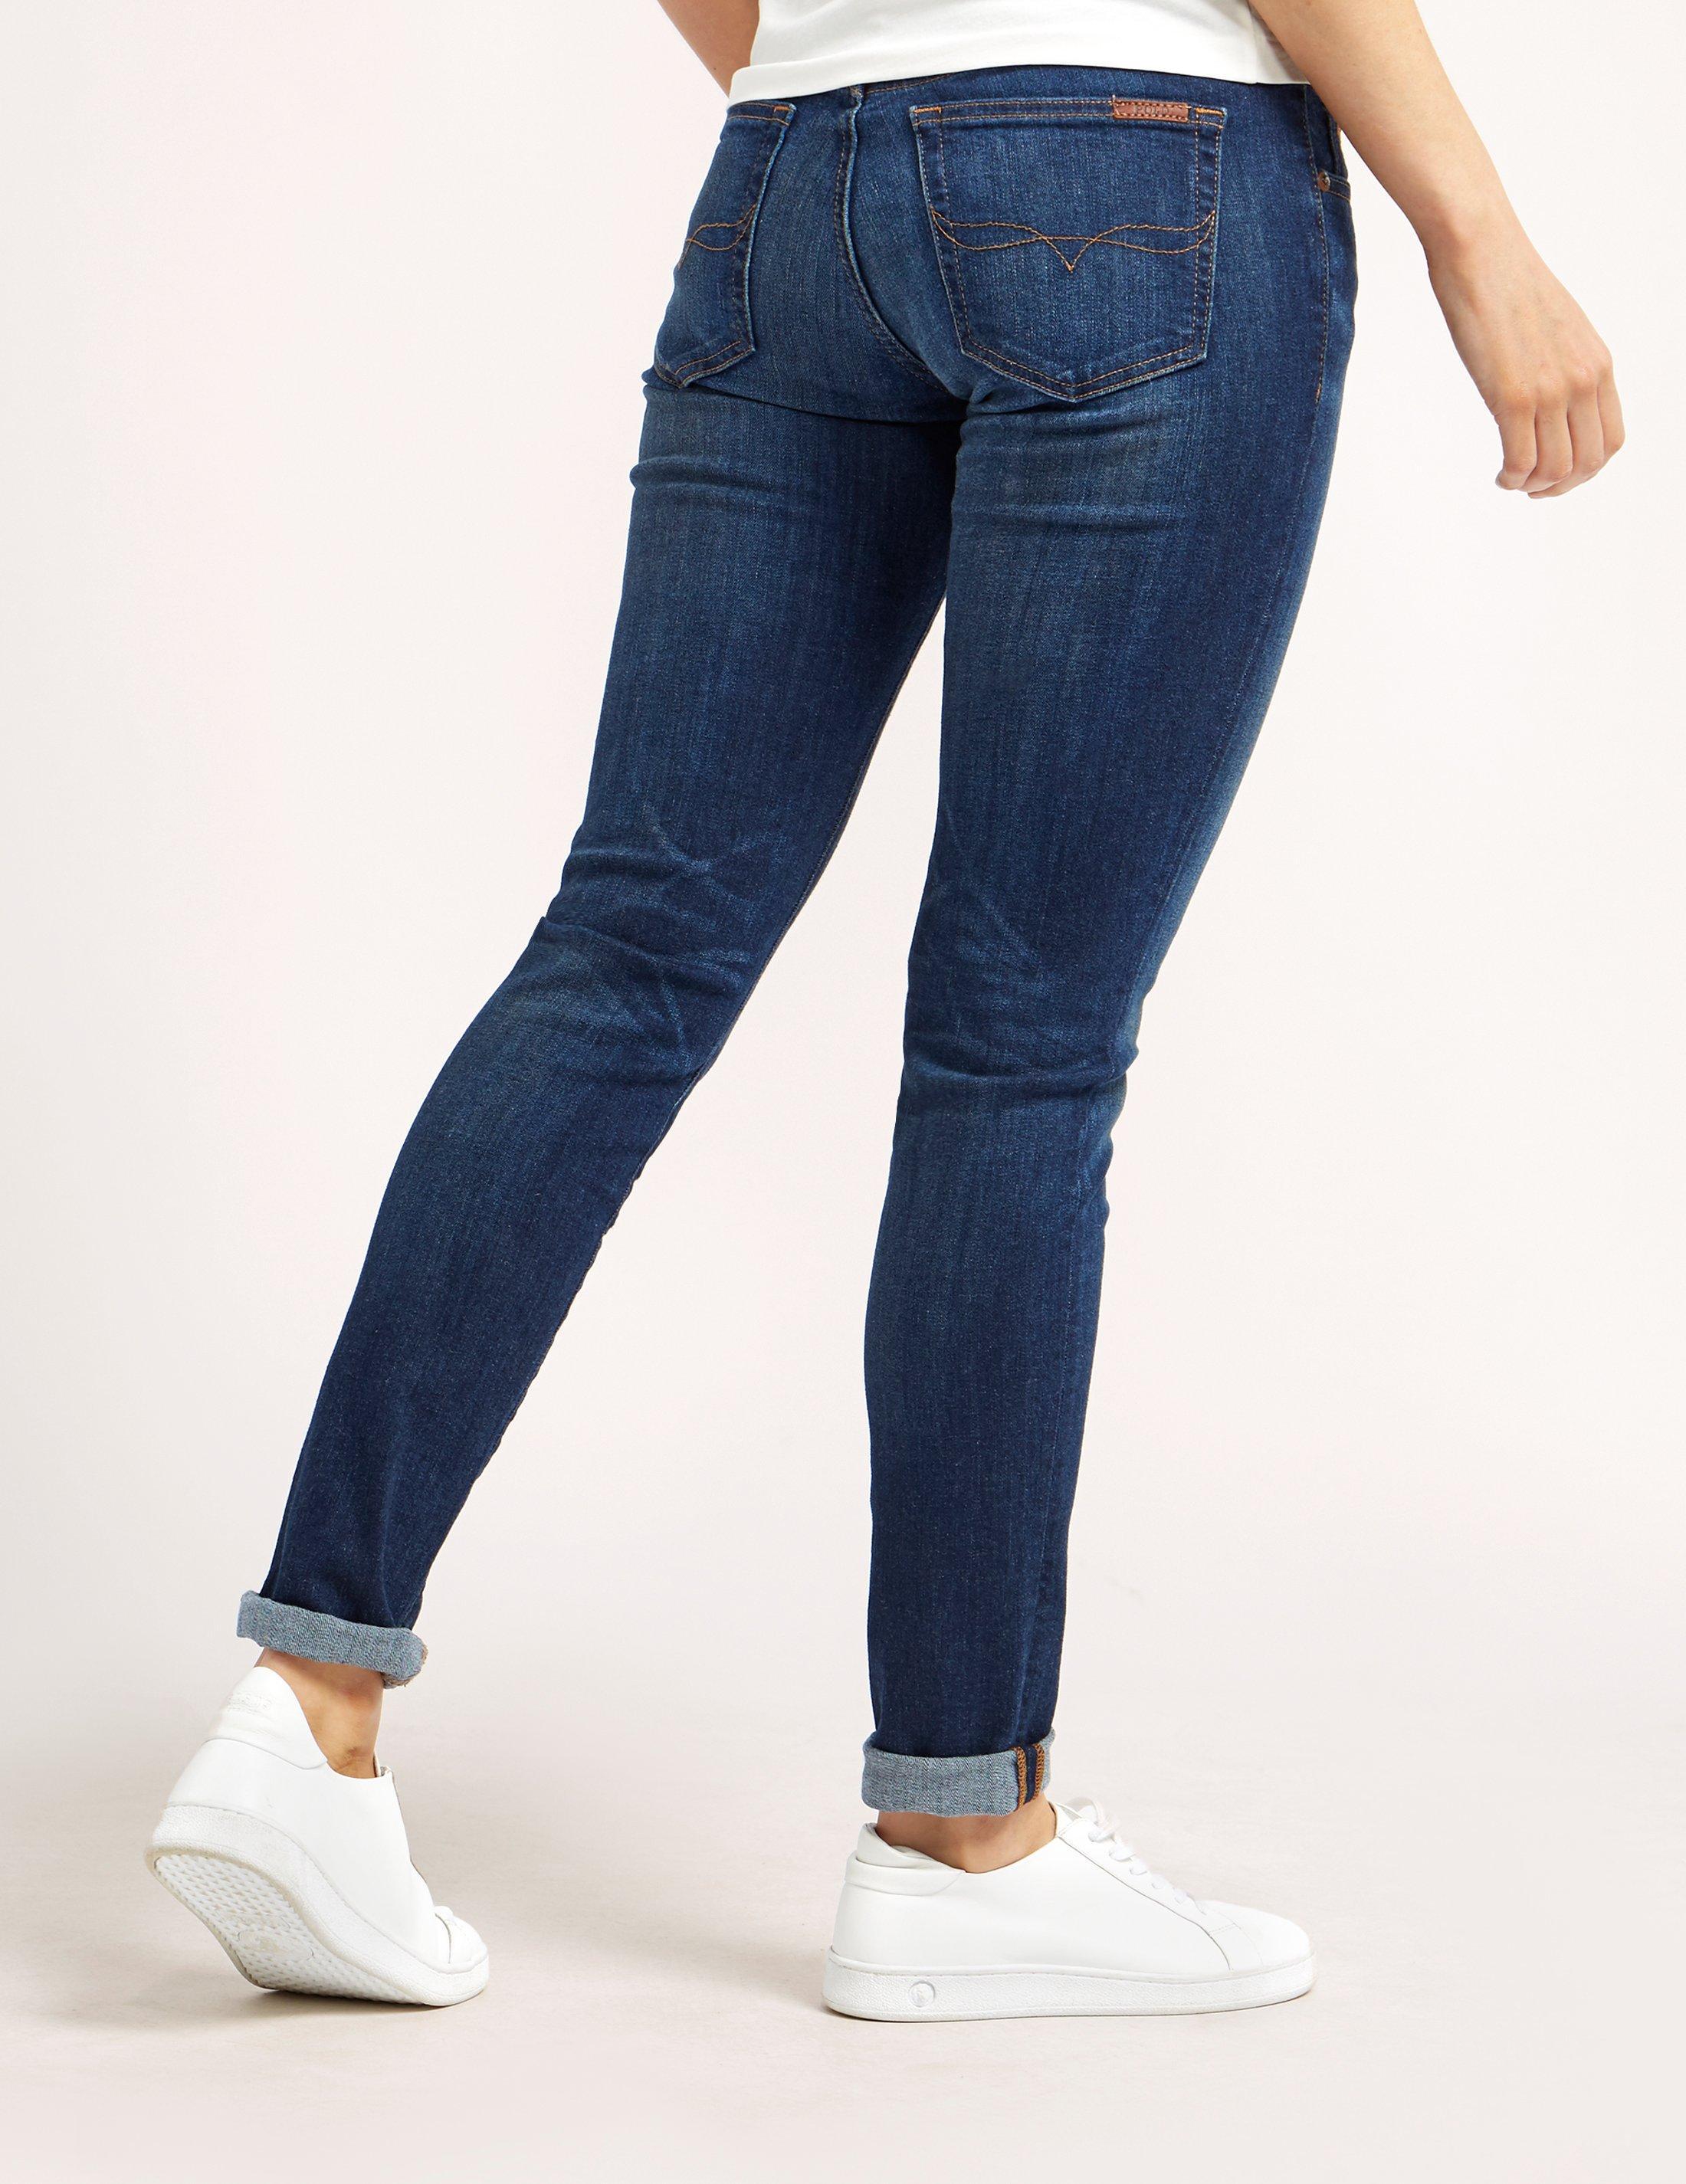 Polo Ralph Lauren Denim Tompkins Skinny Jeans in Indigo (Blue) - Lyst